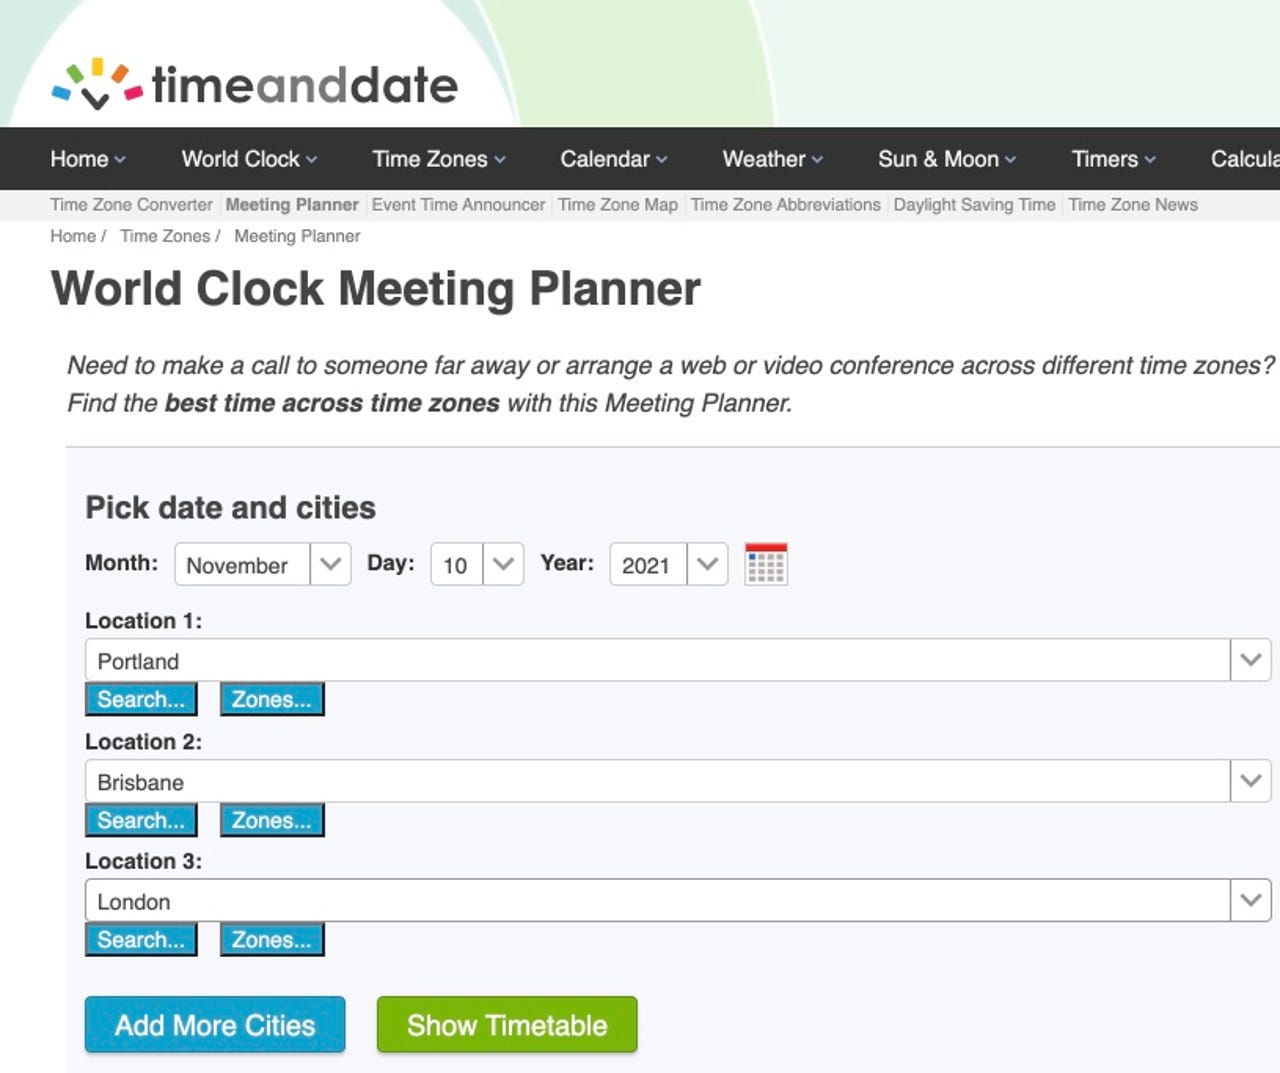 meeting-planner-find-best-time-across-time-zones-2021-11-09-22-53-50.jpg